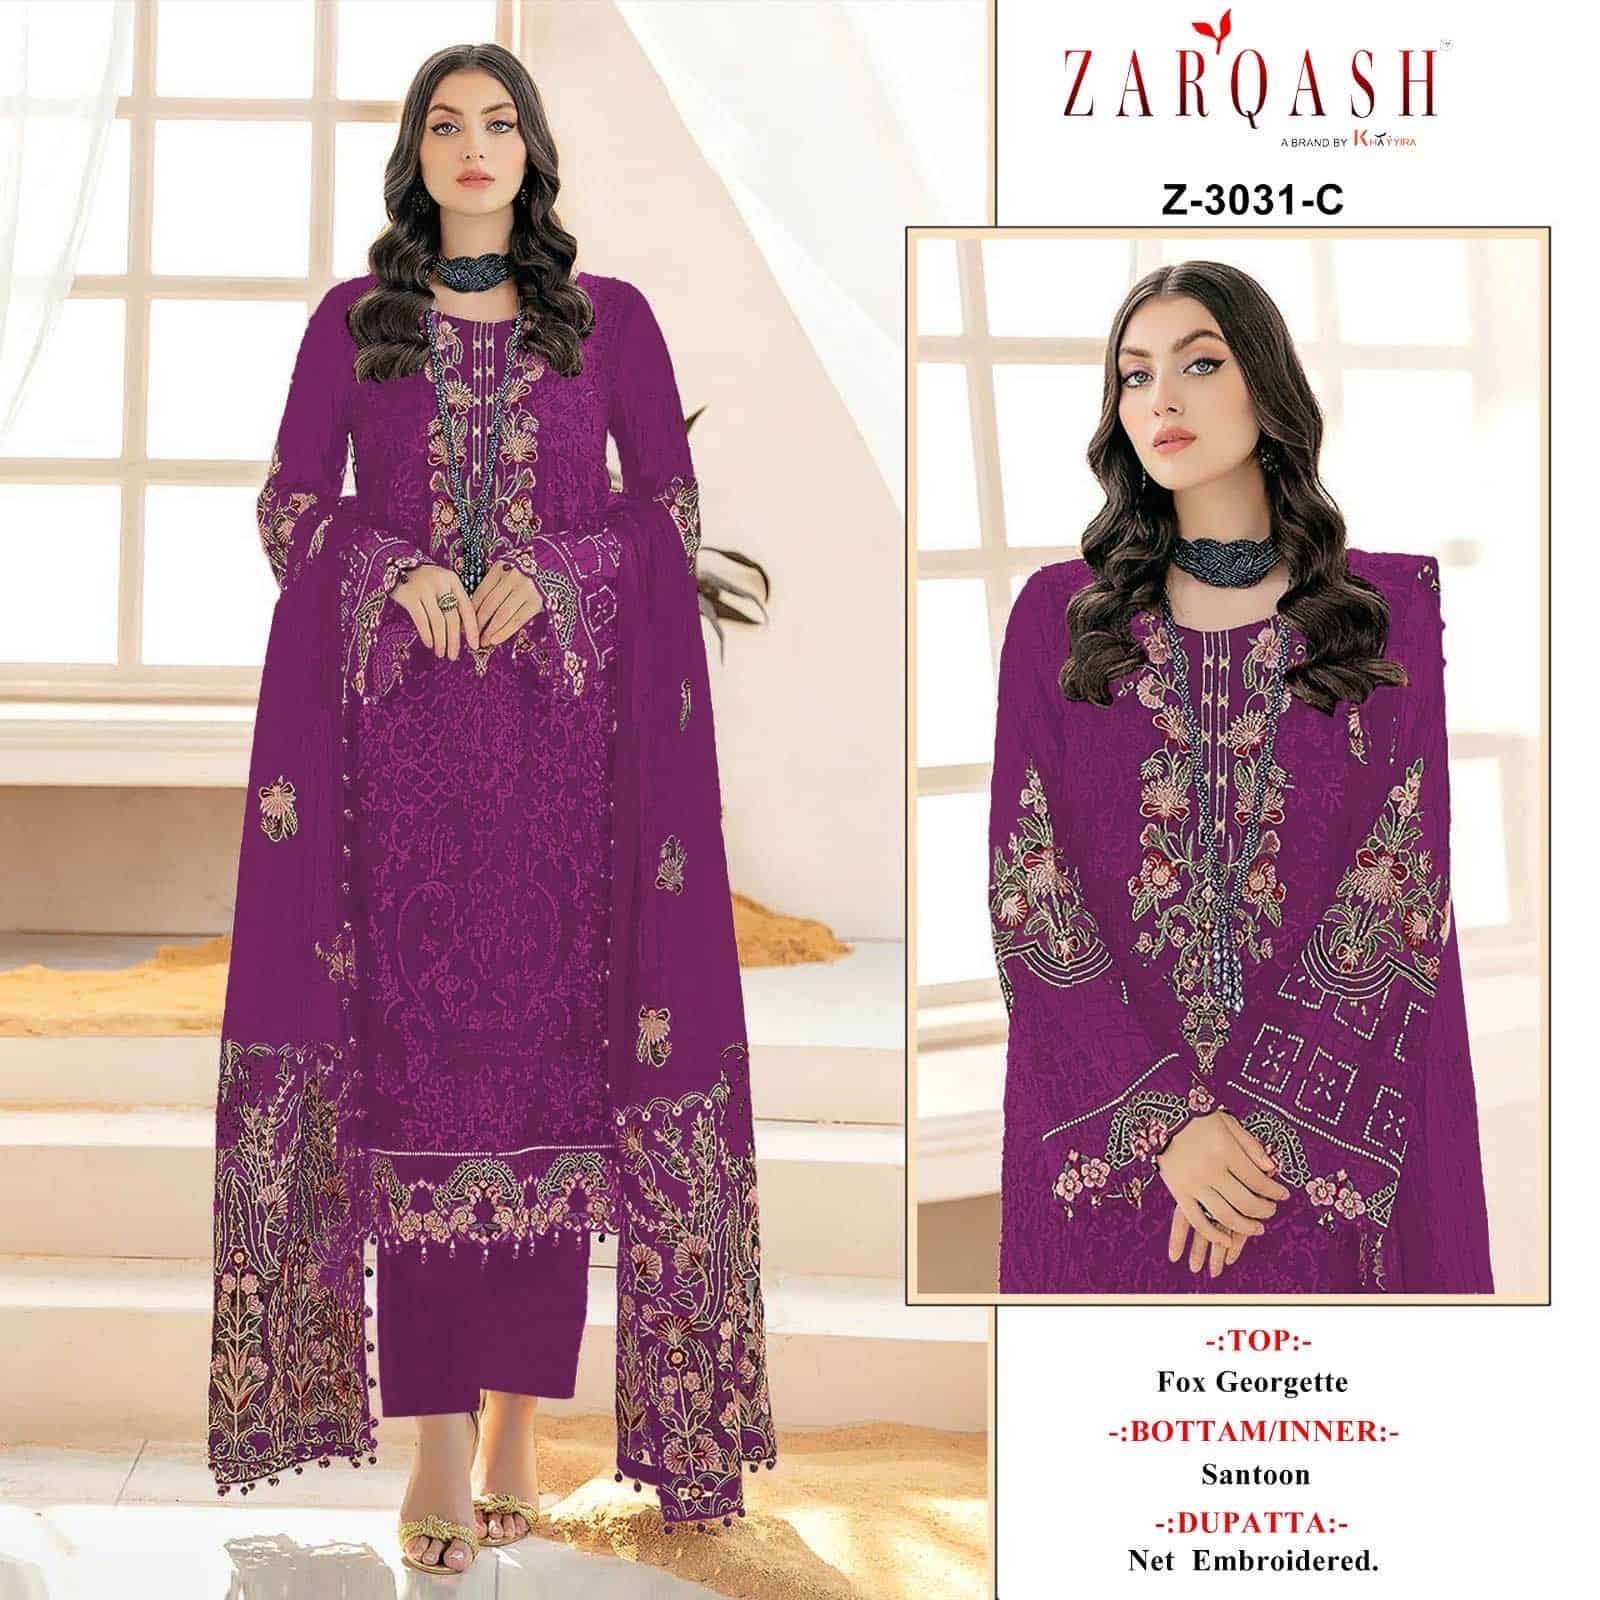 Zarqash Z 3031 C Exclusive Party Wear Style Designer Pakistani Collection